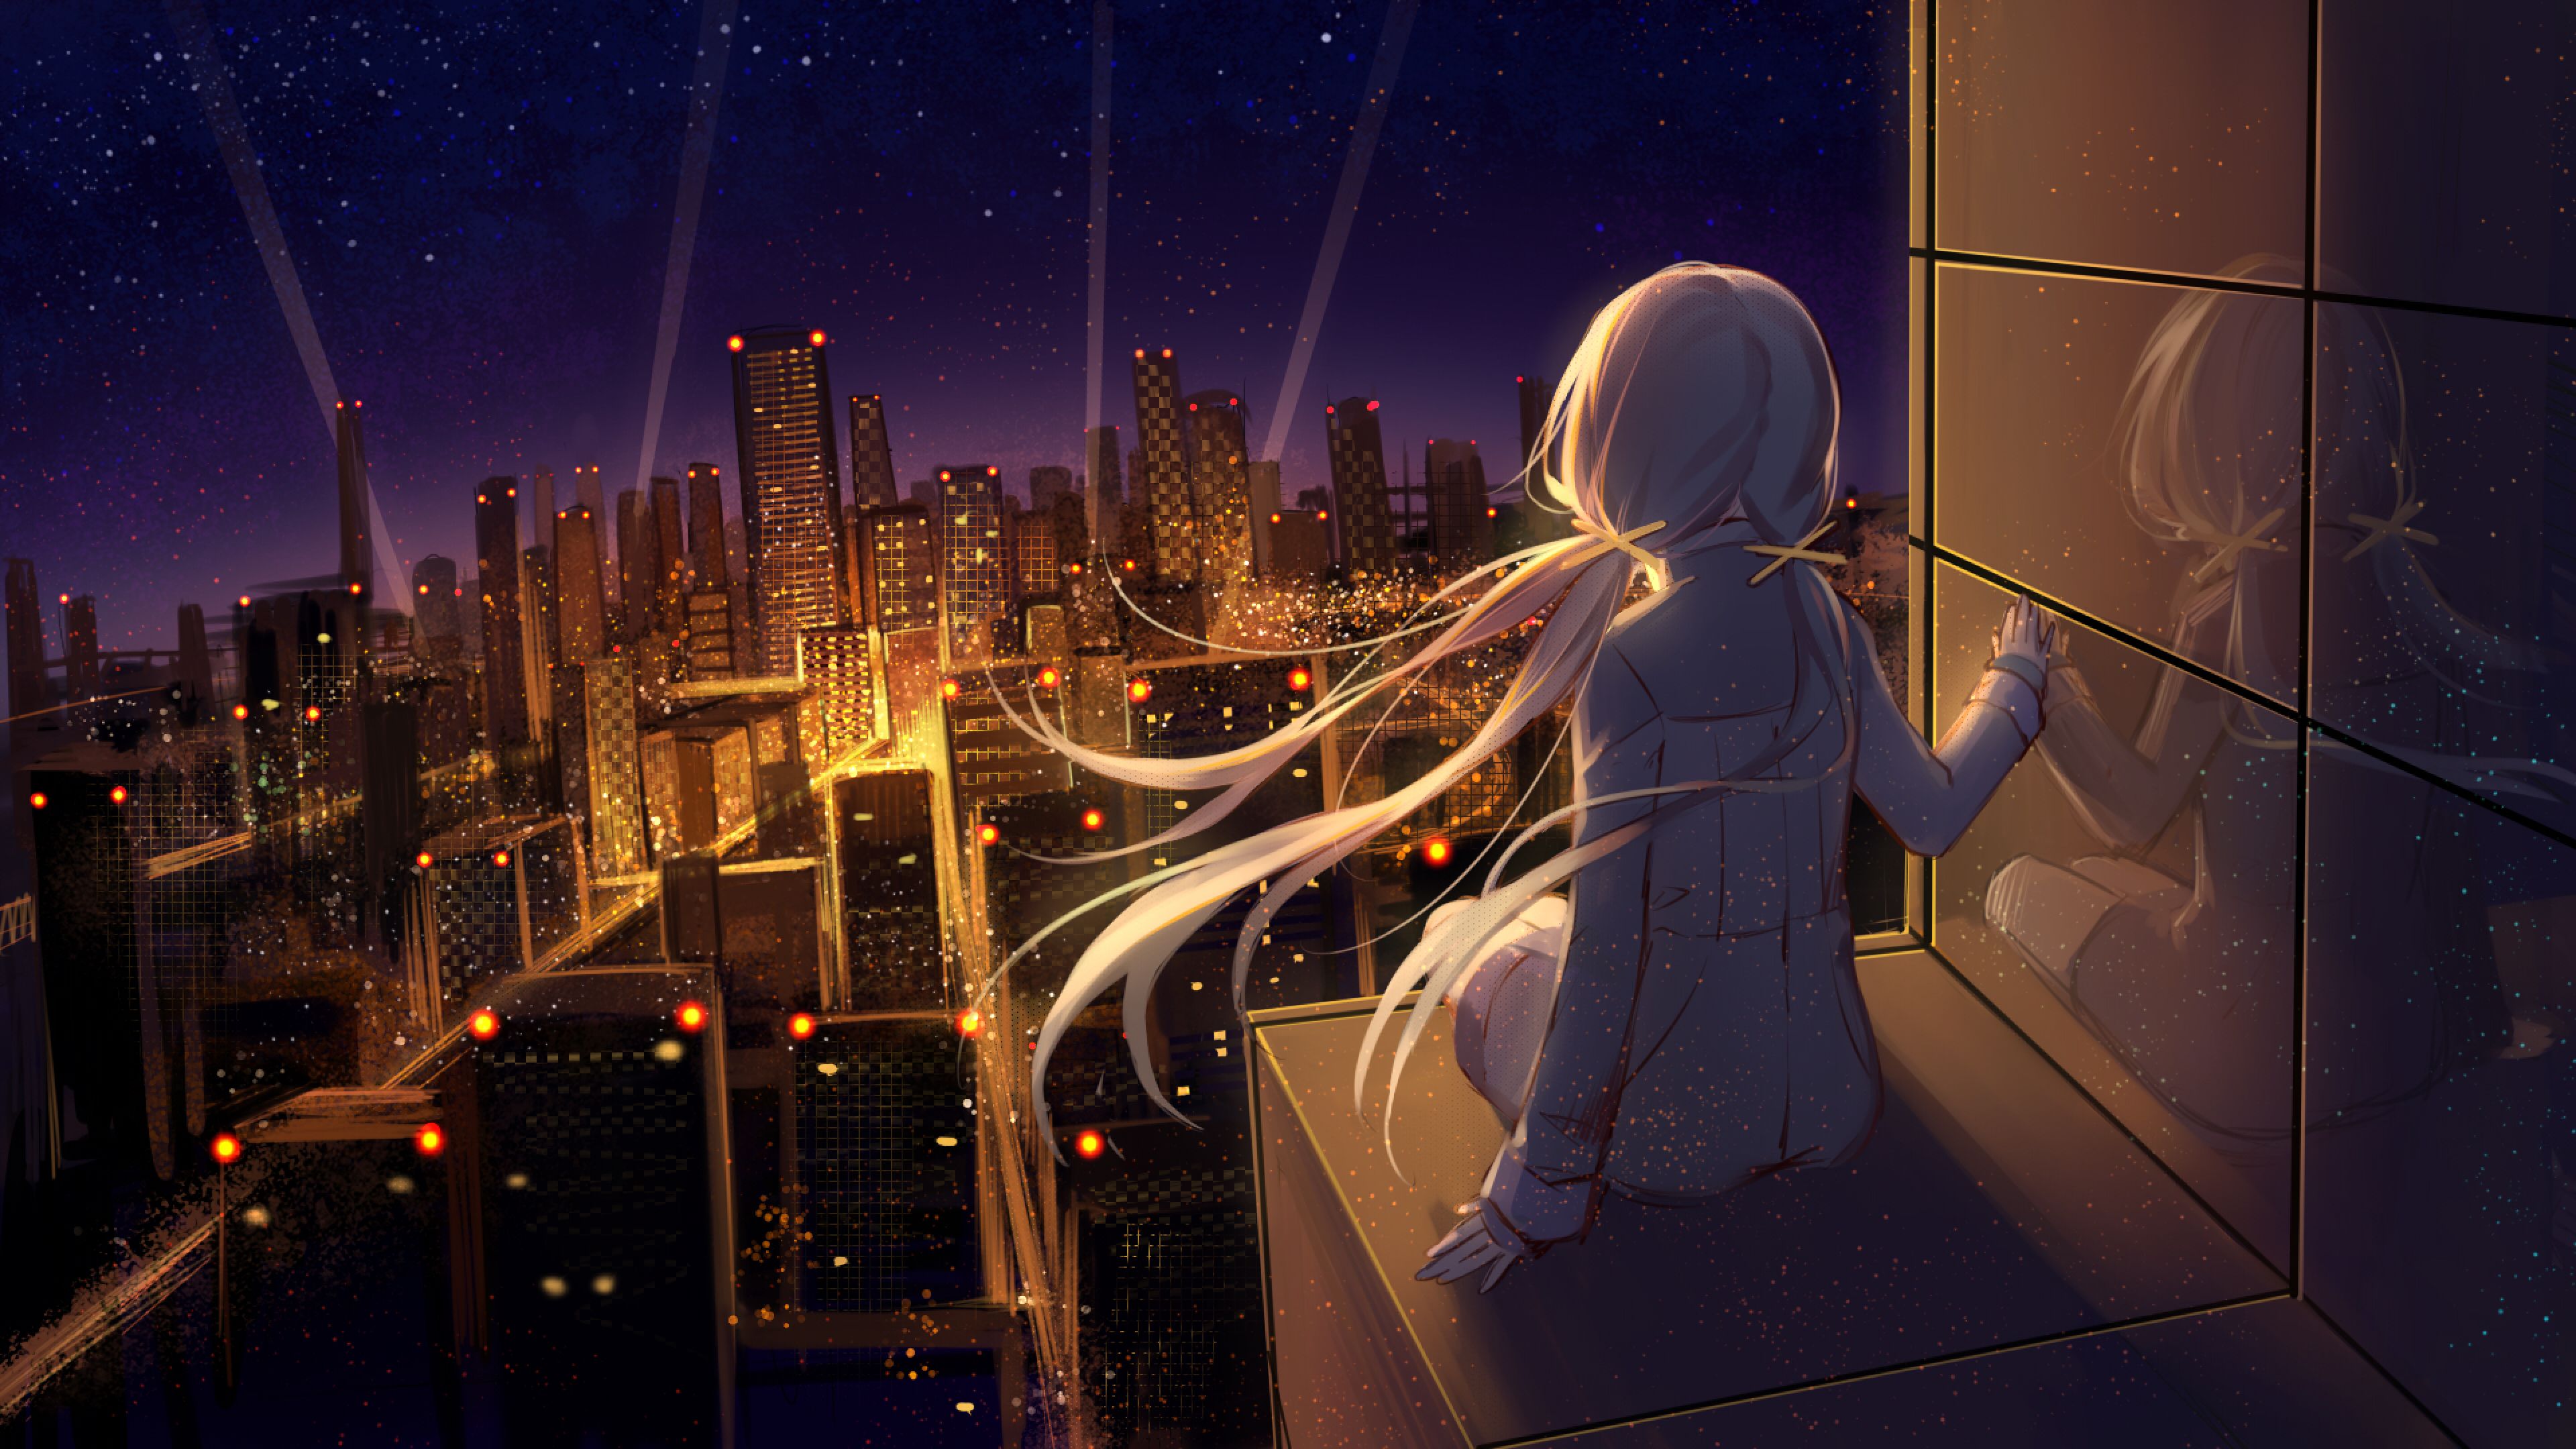 Anime Girl Looking at Stars 4K Wallpaper, HD Anime 4K